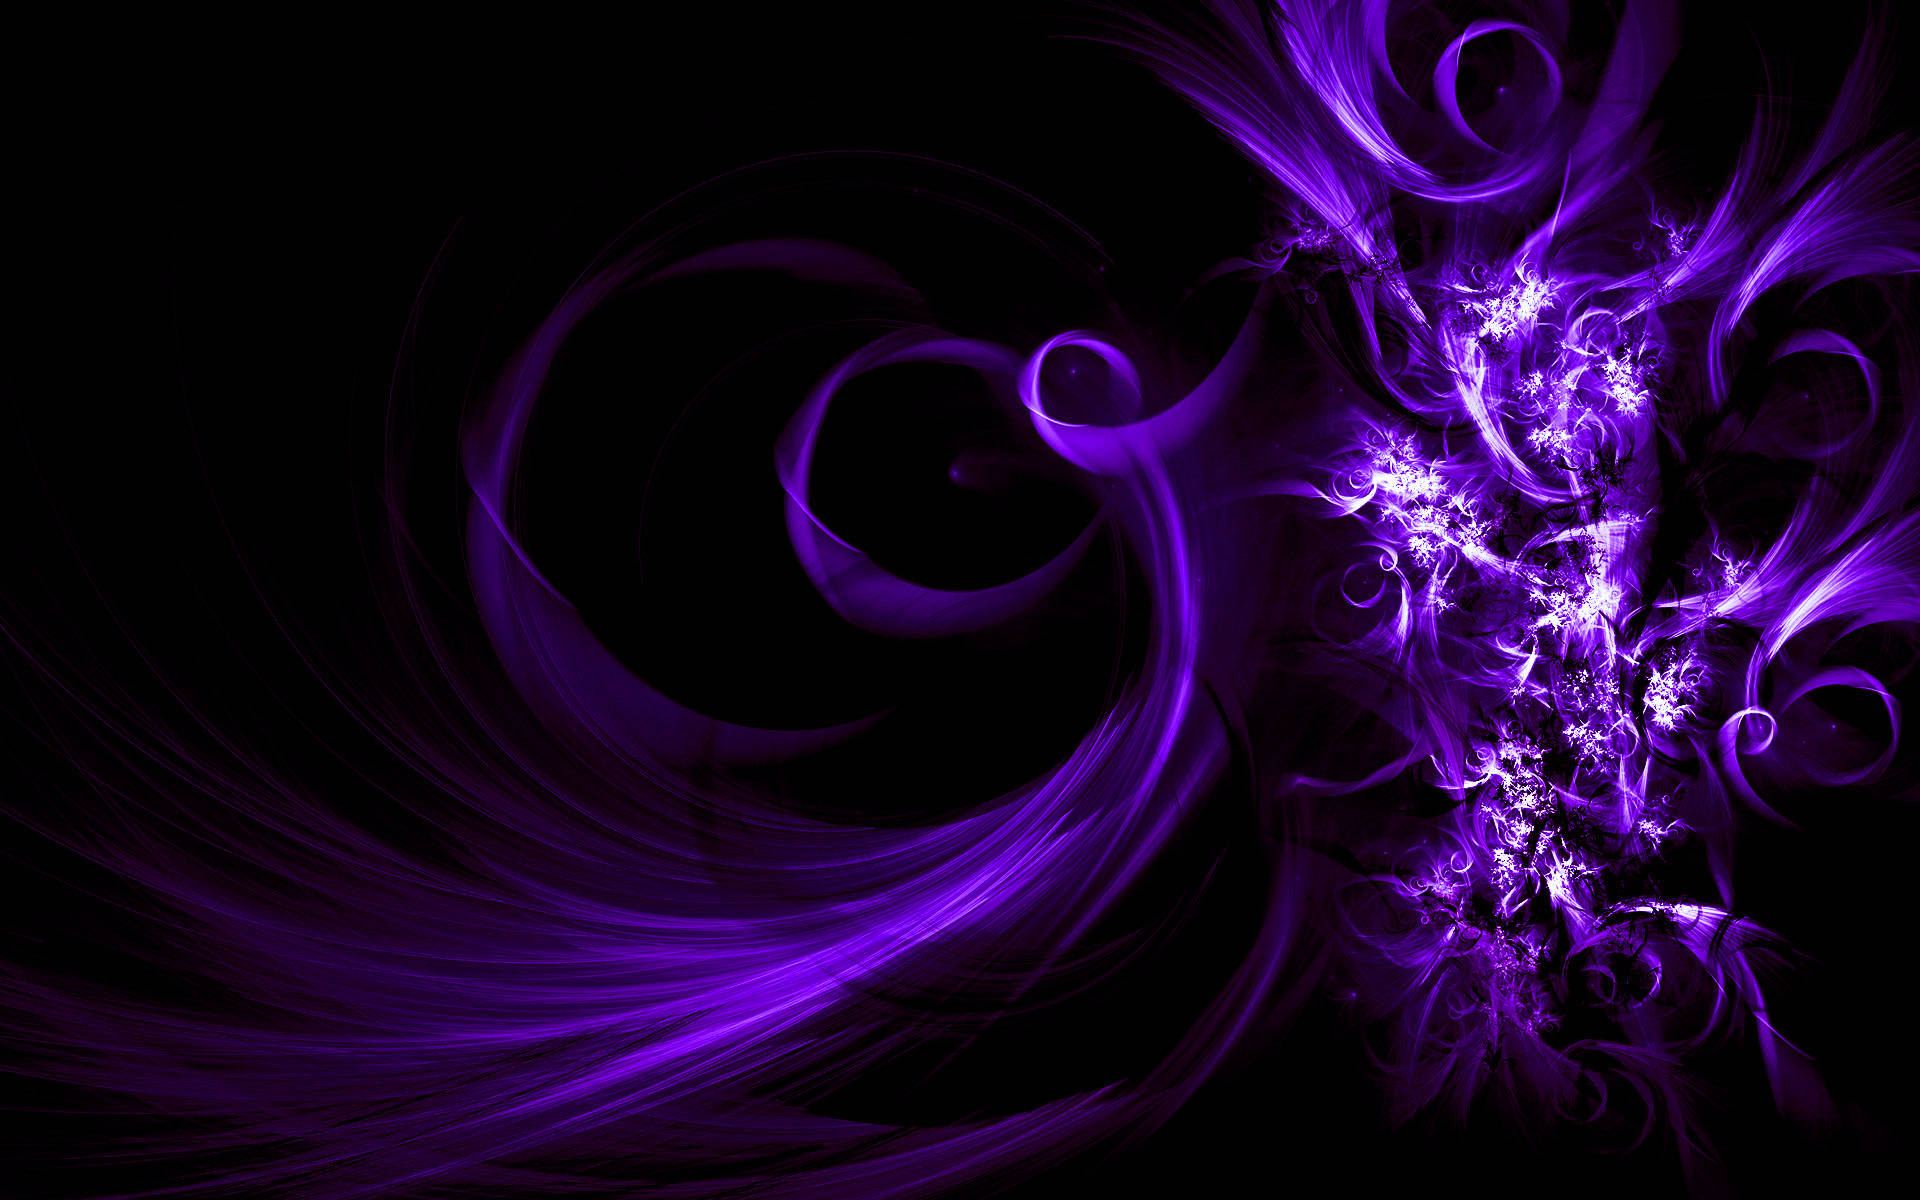 Black And Purple Swirls Wallpaper